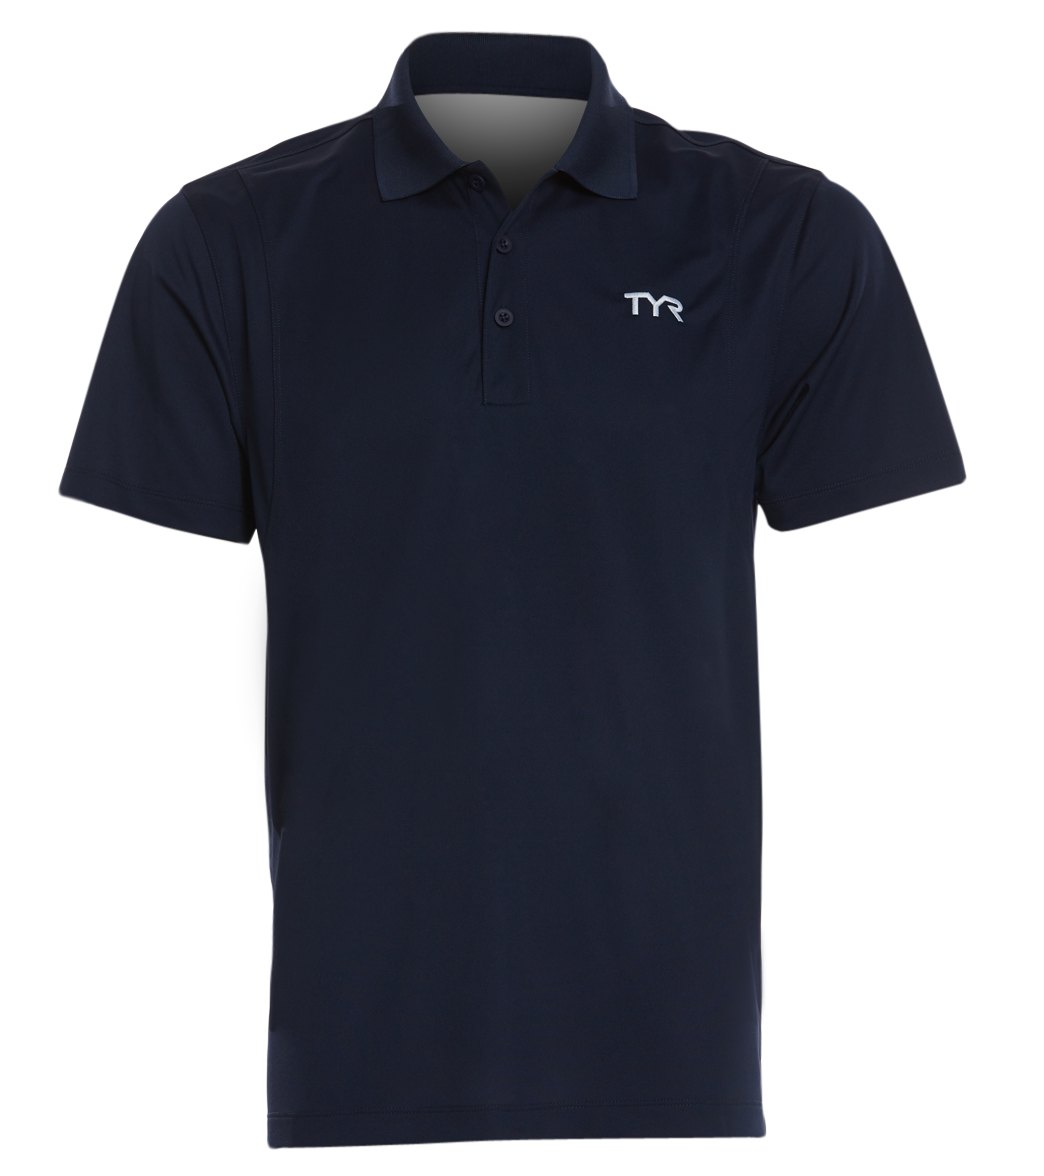 TYR Men's Alliance Tech Polo Shirt - Navy Large Polyester - Swimoutlet.com